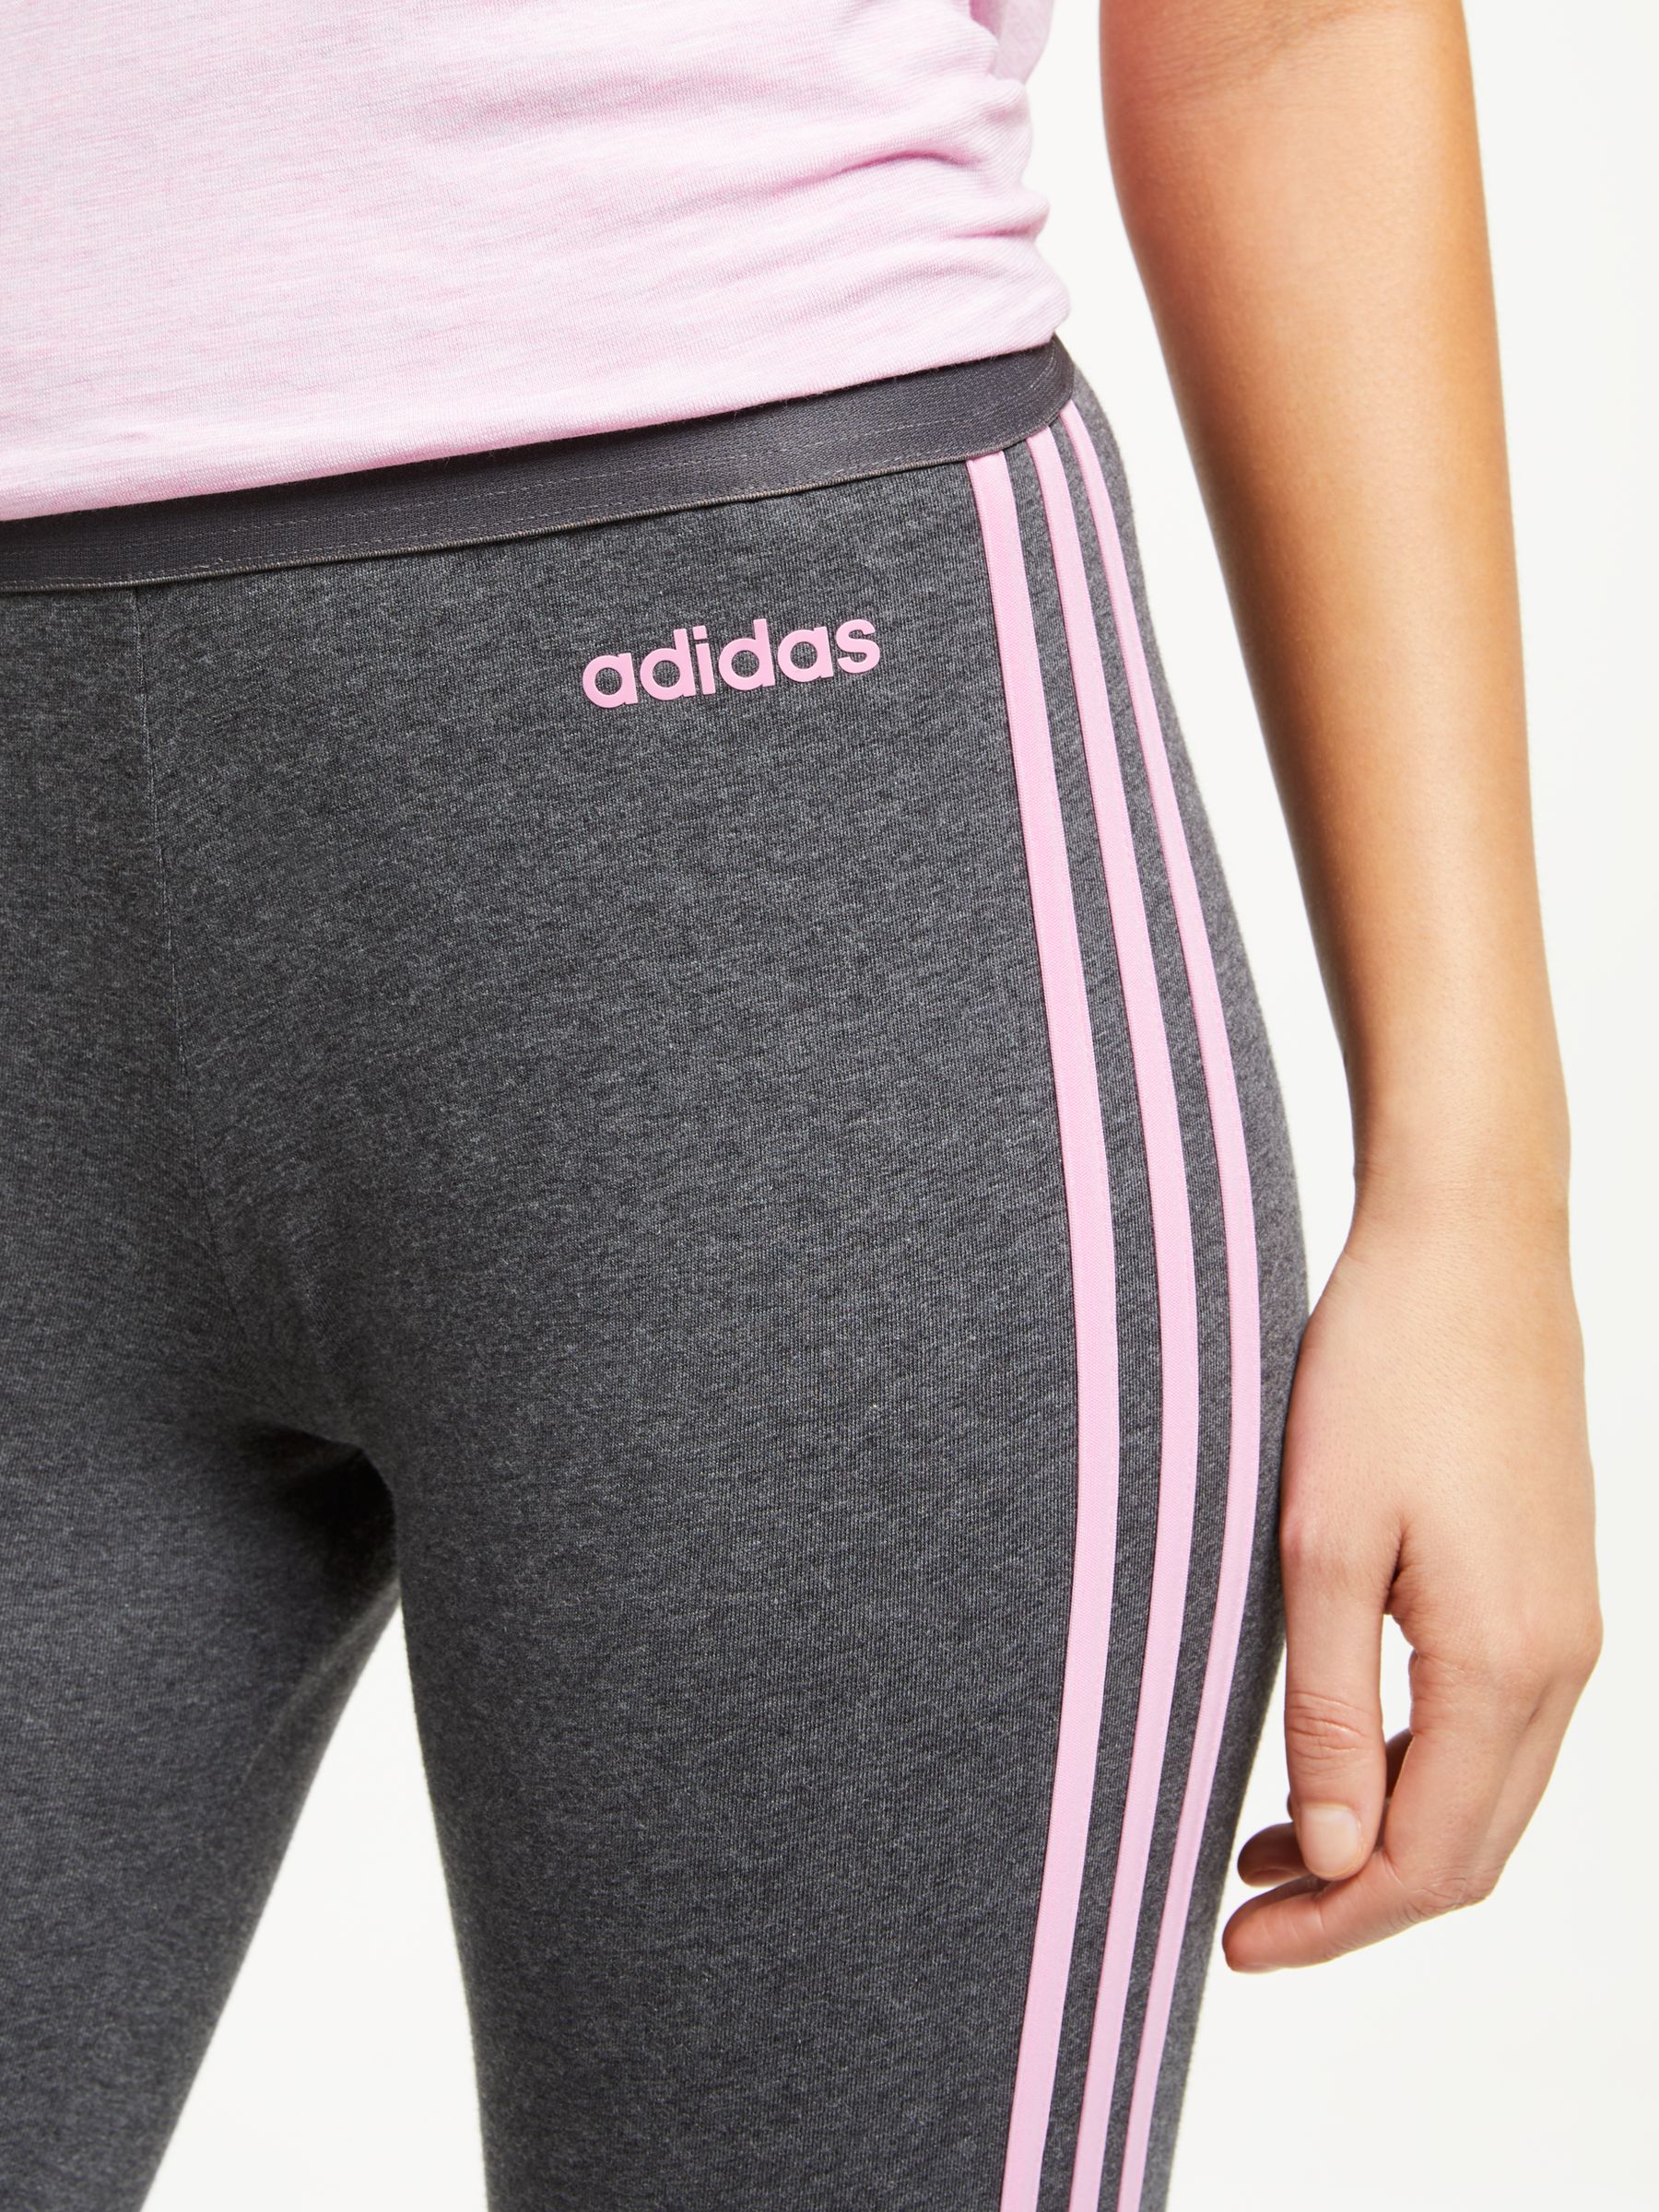 adidas grey and pink leggings